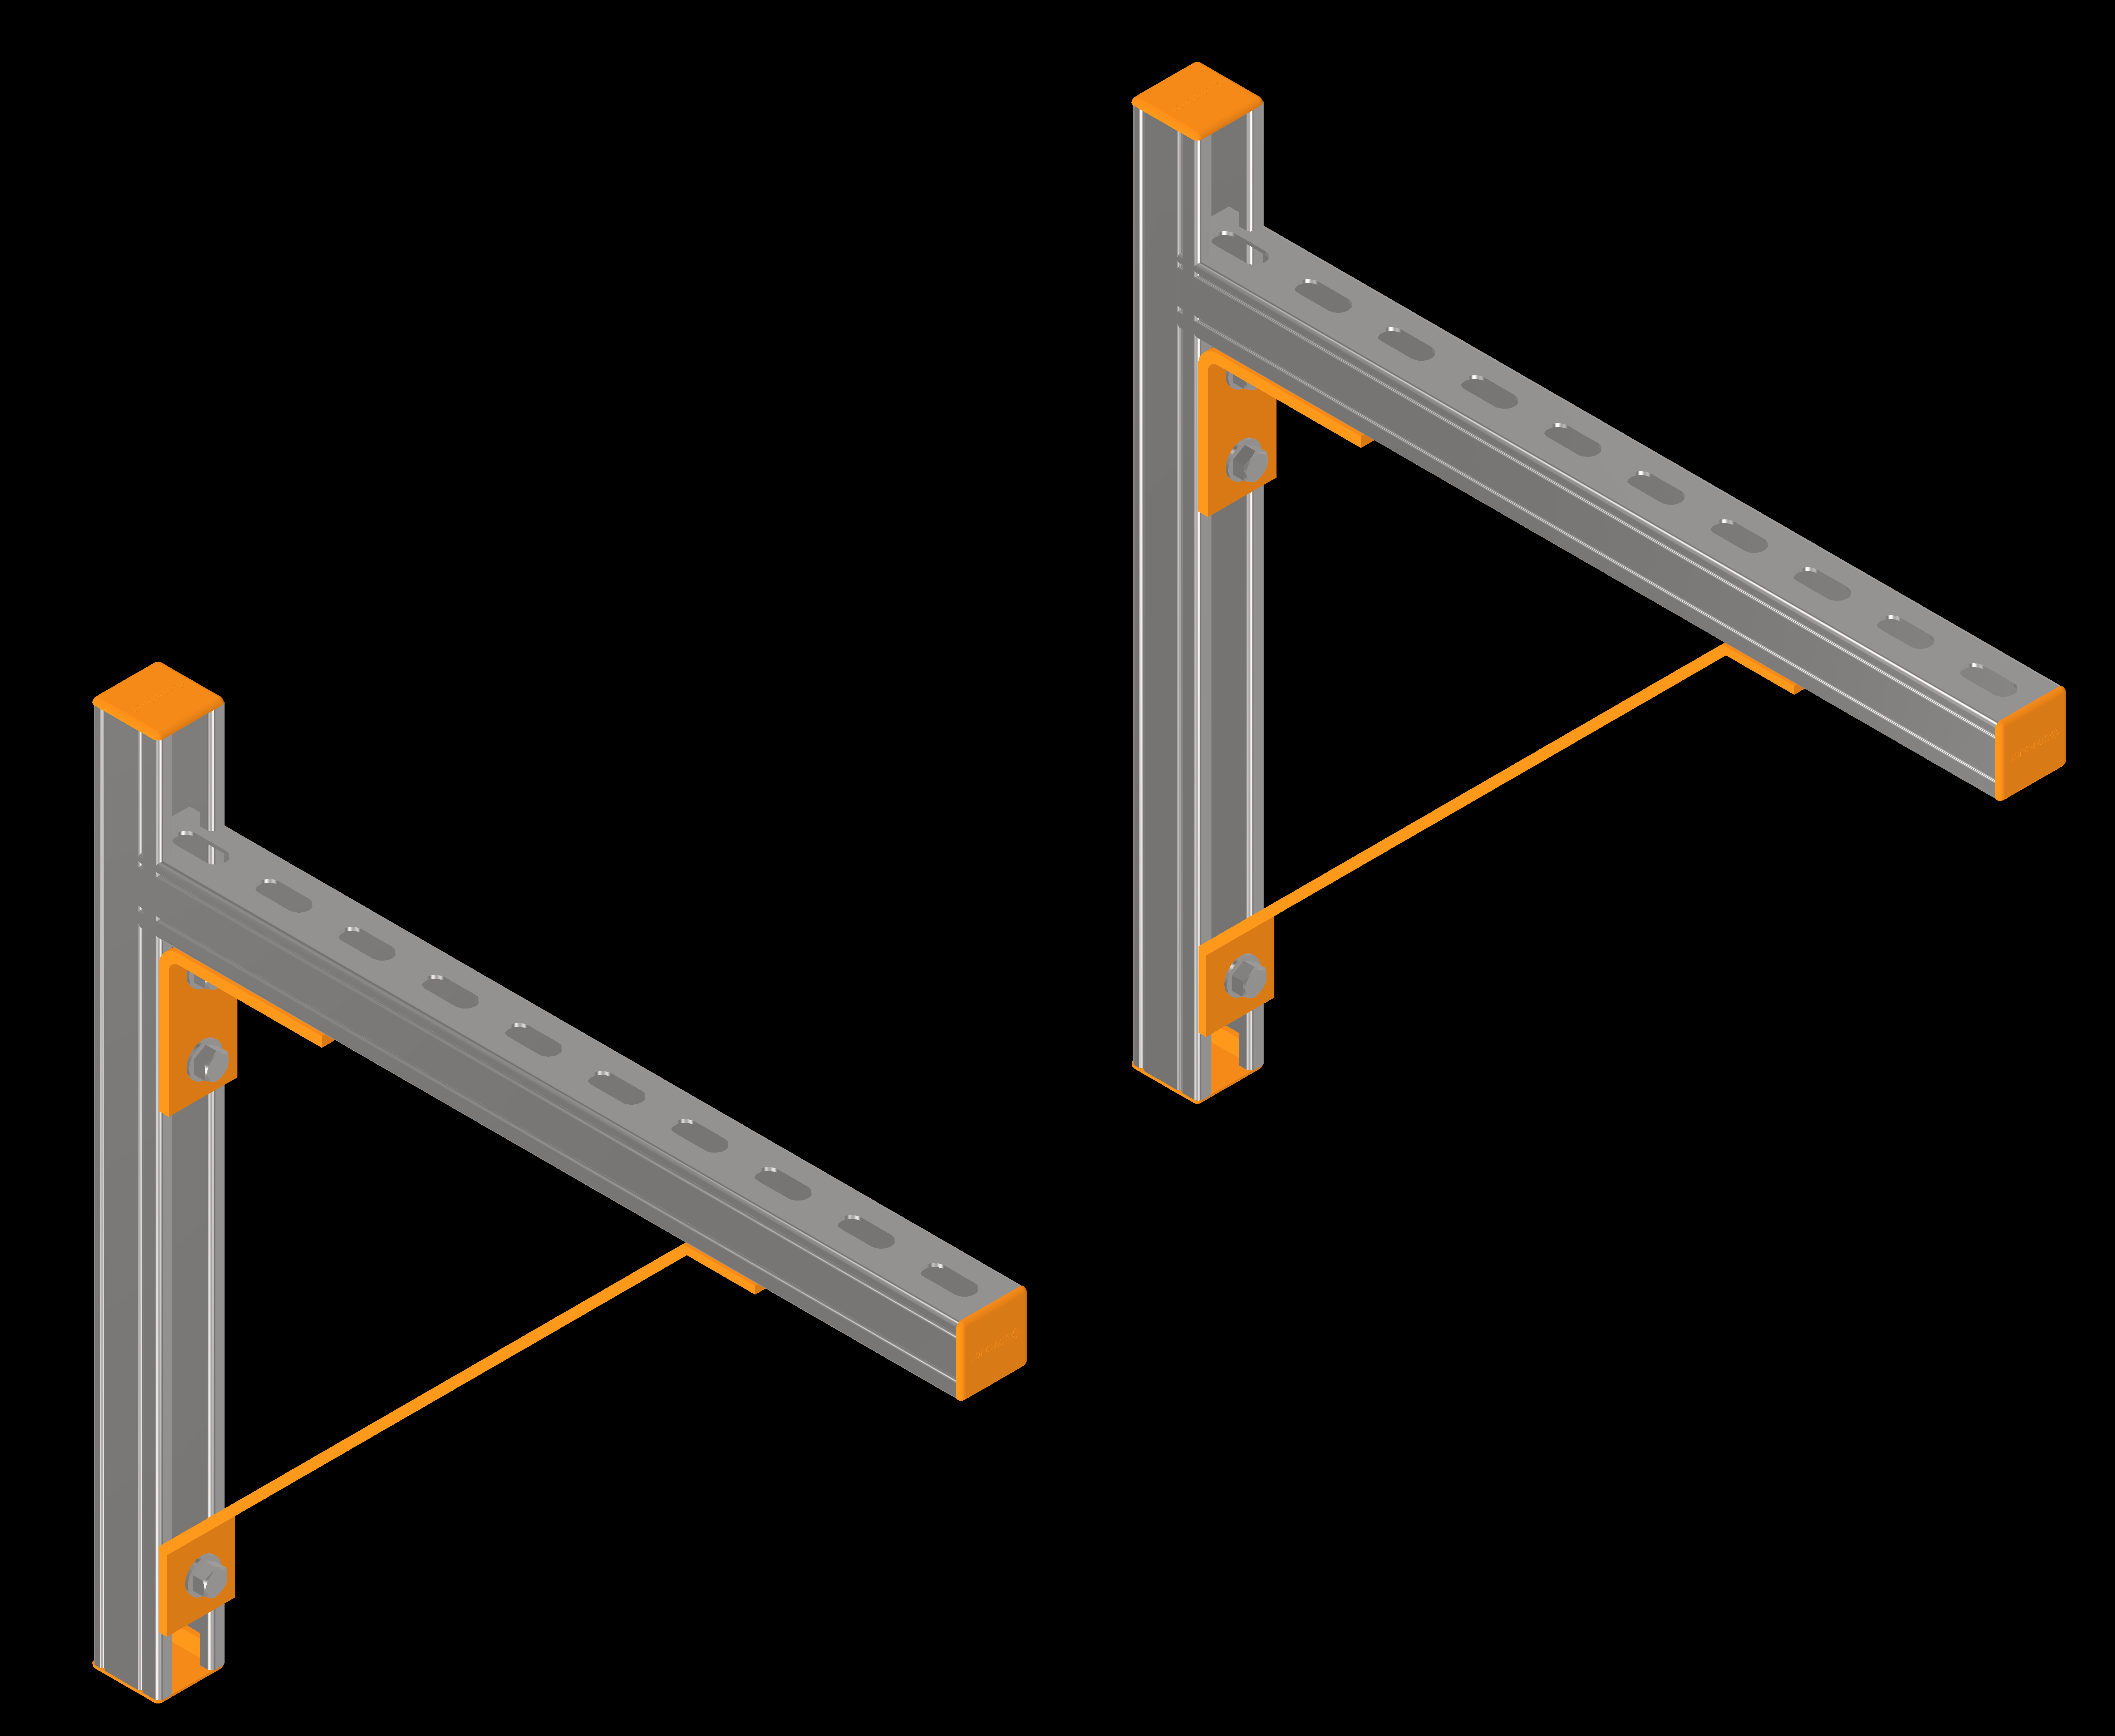 Vertical Electrostatic Cantilever bracket for A/C outdoor